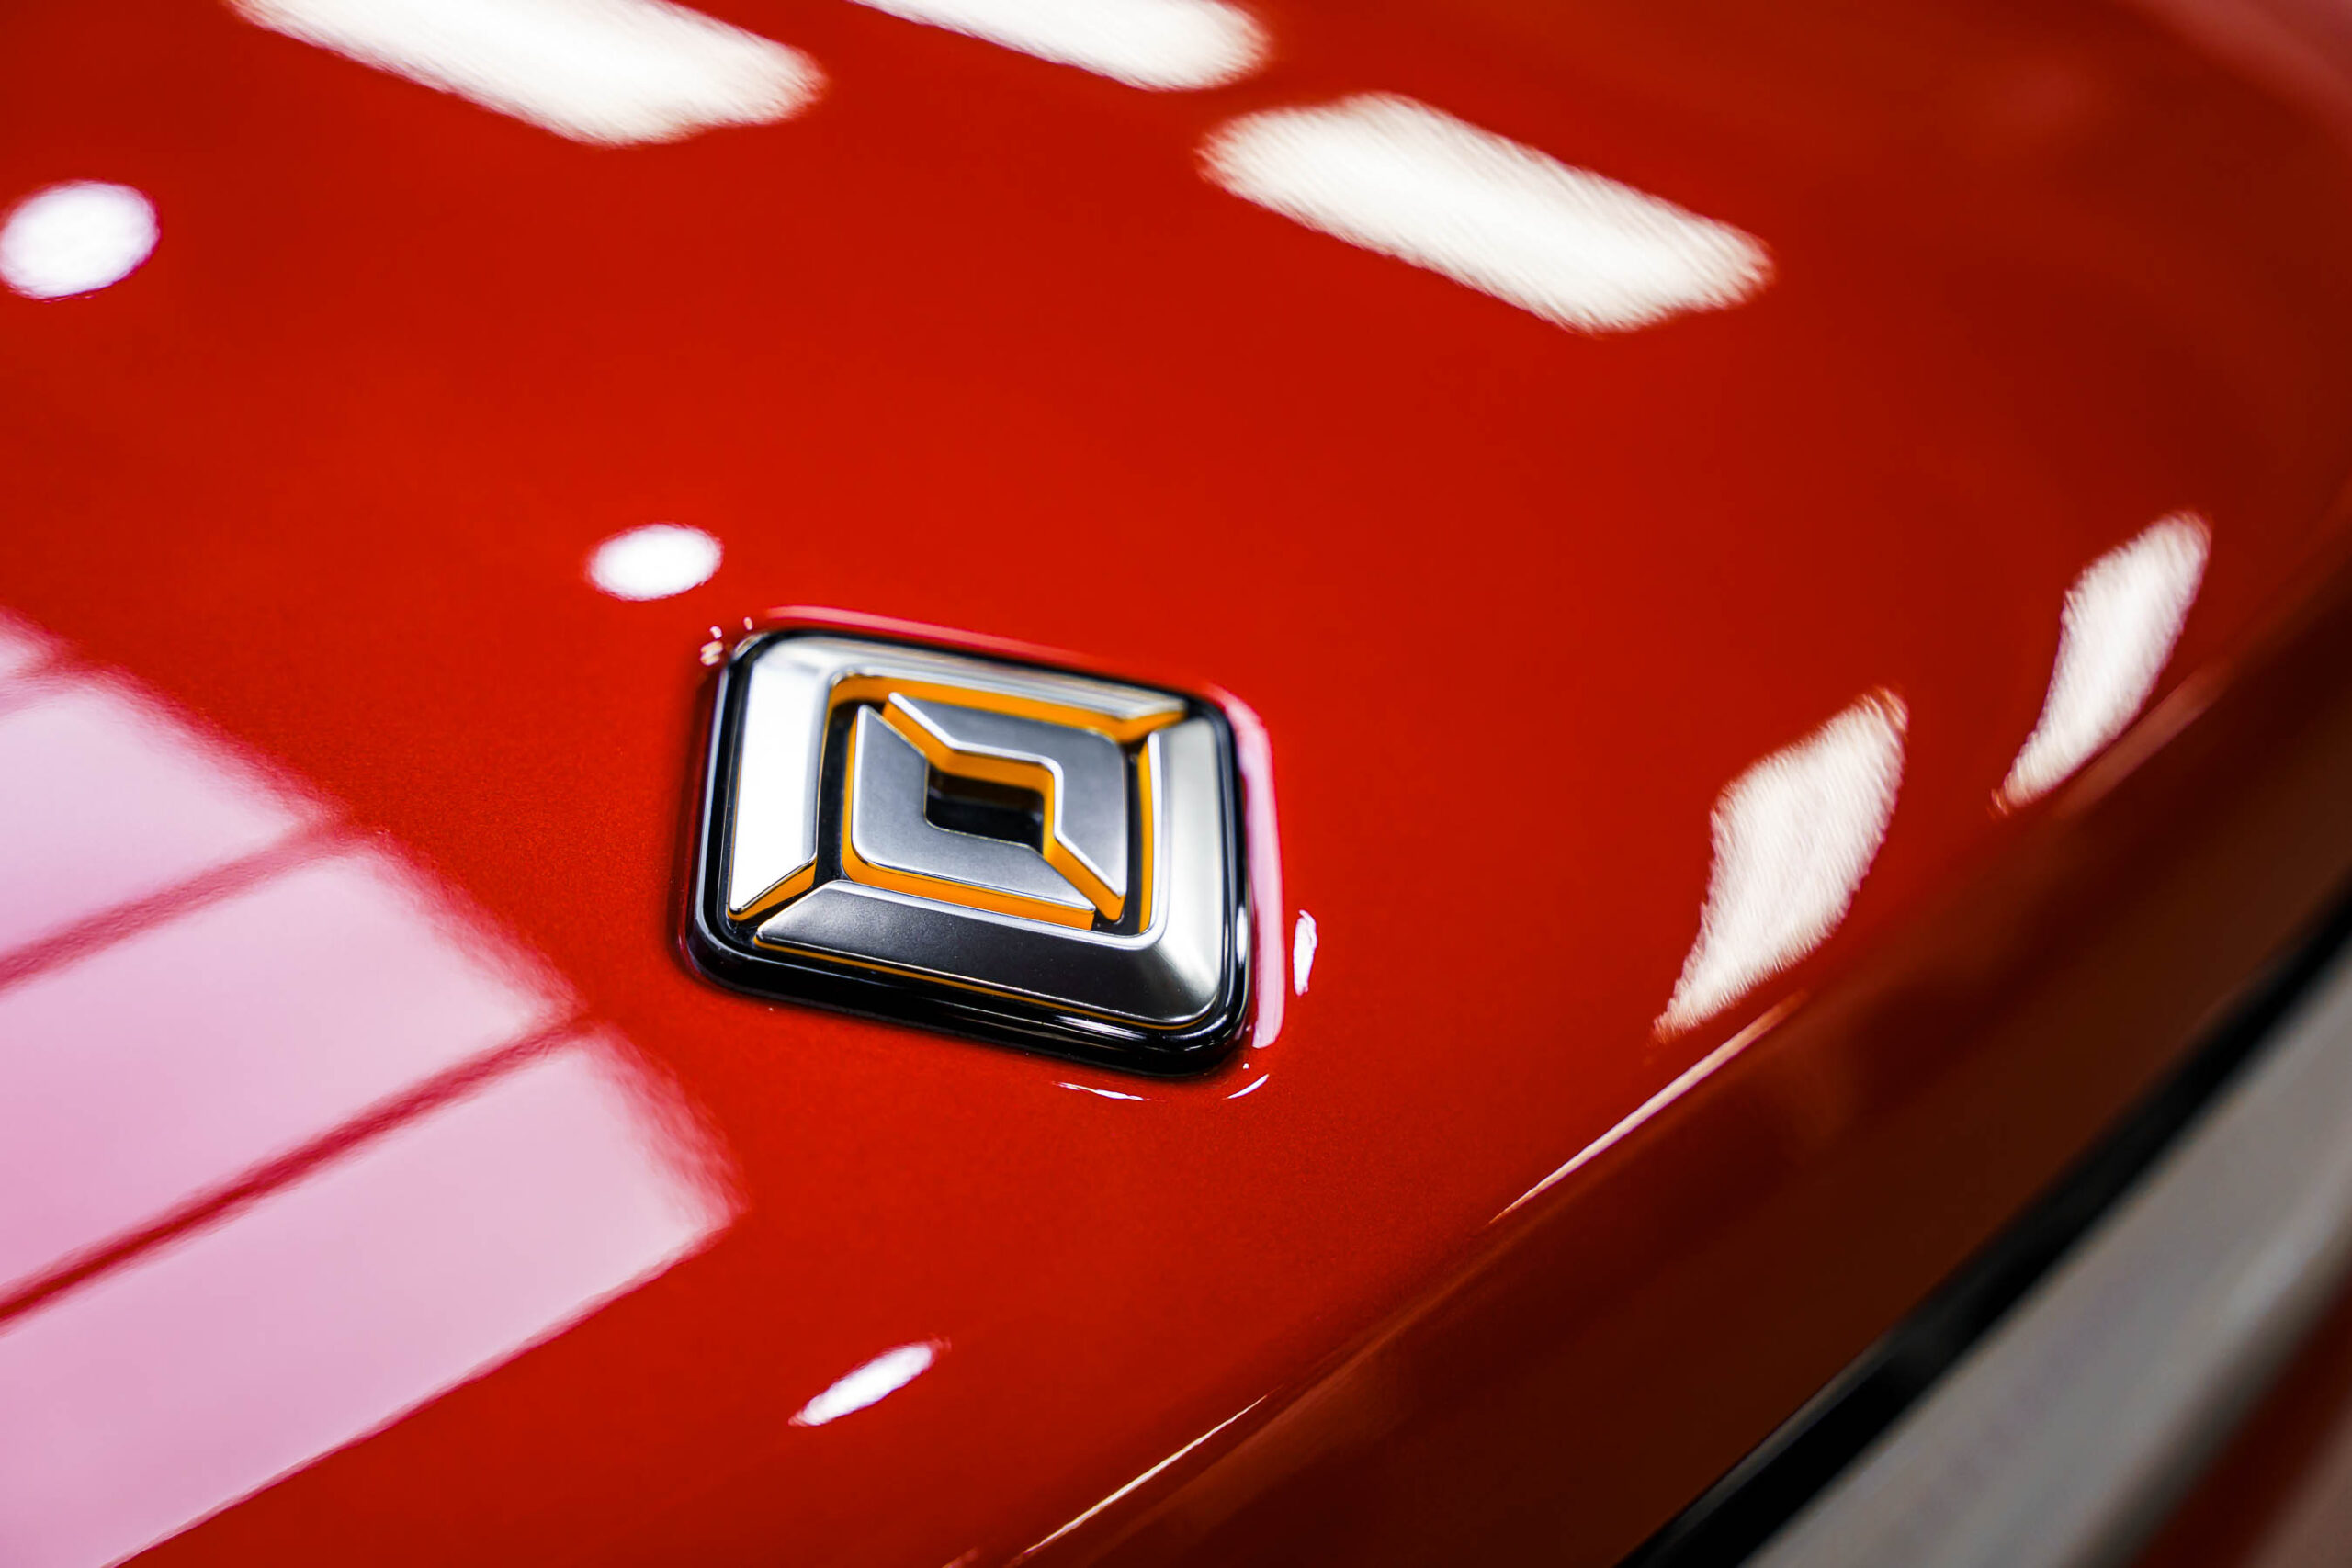 Finished car close up of emblem